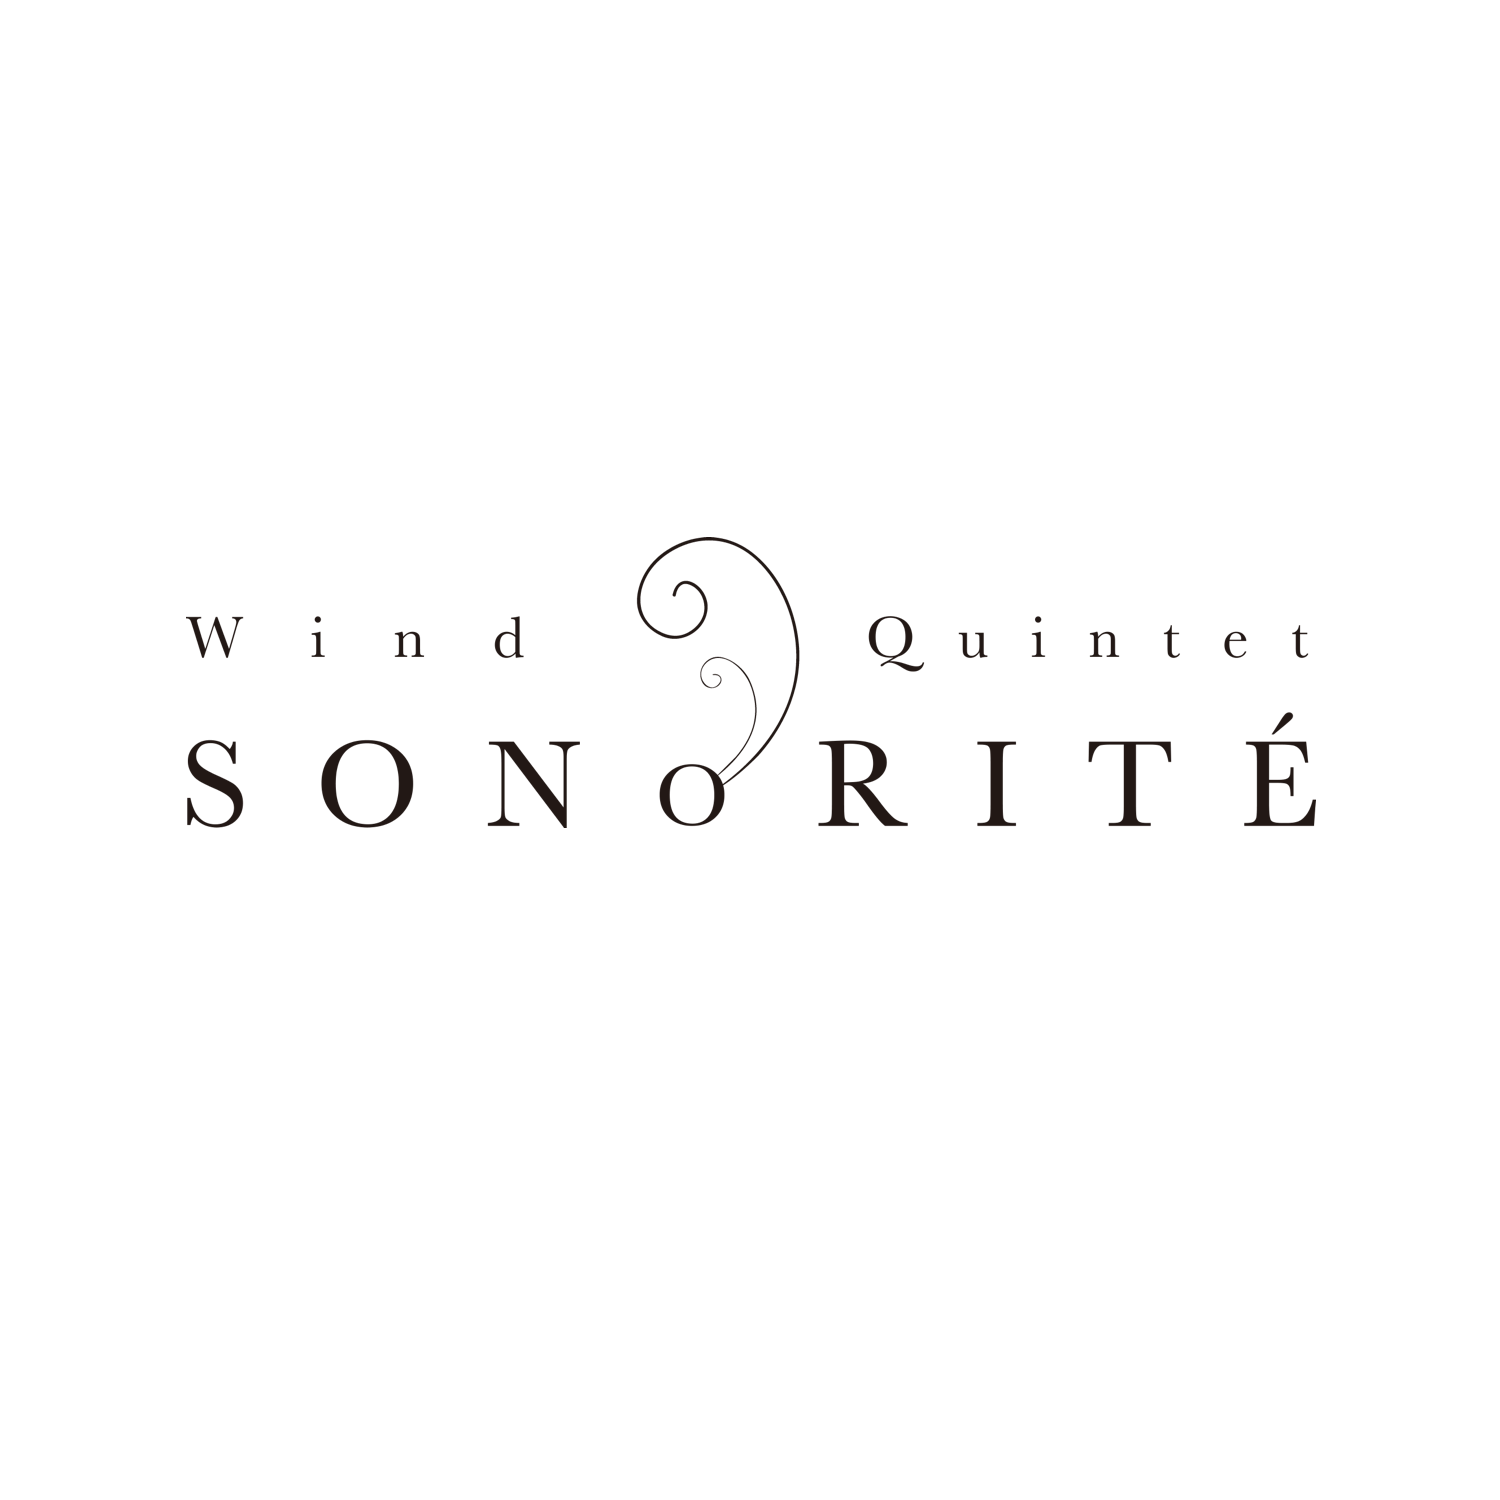 Wind Quintet SONORITE